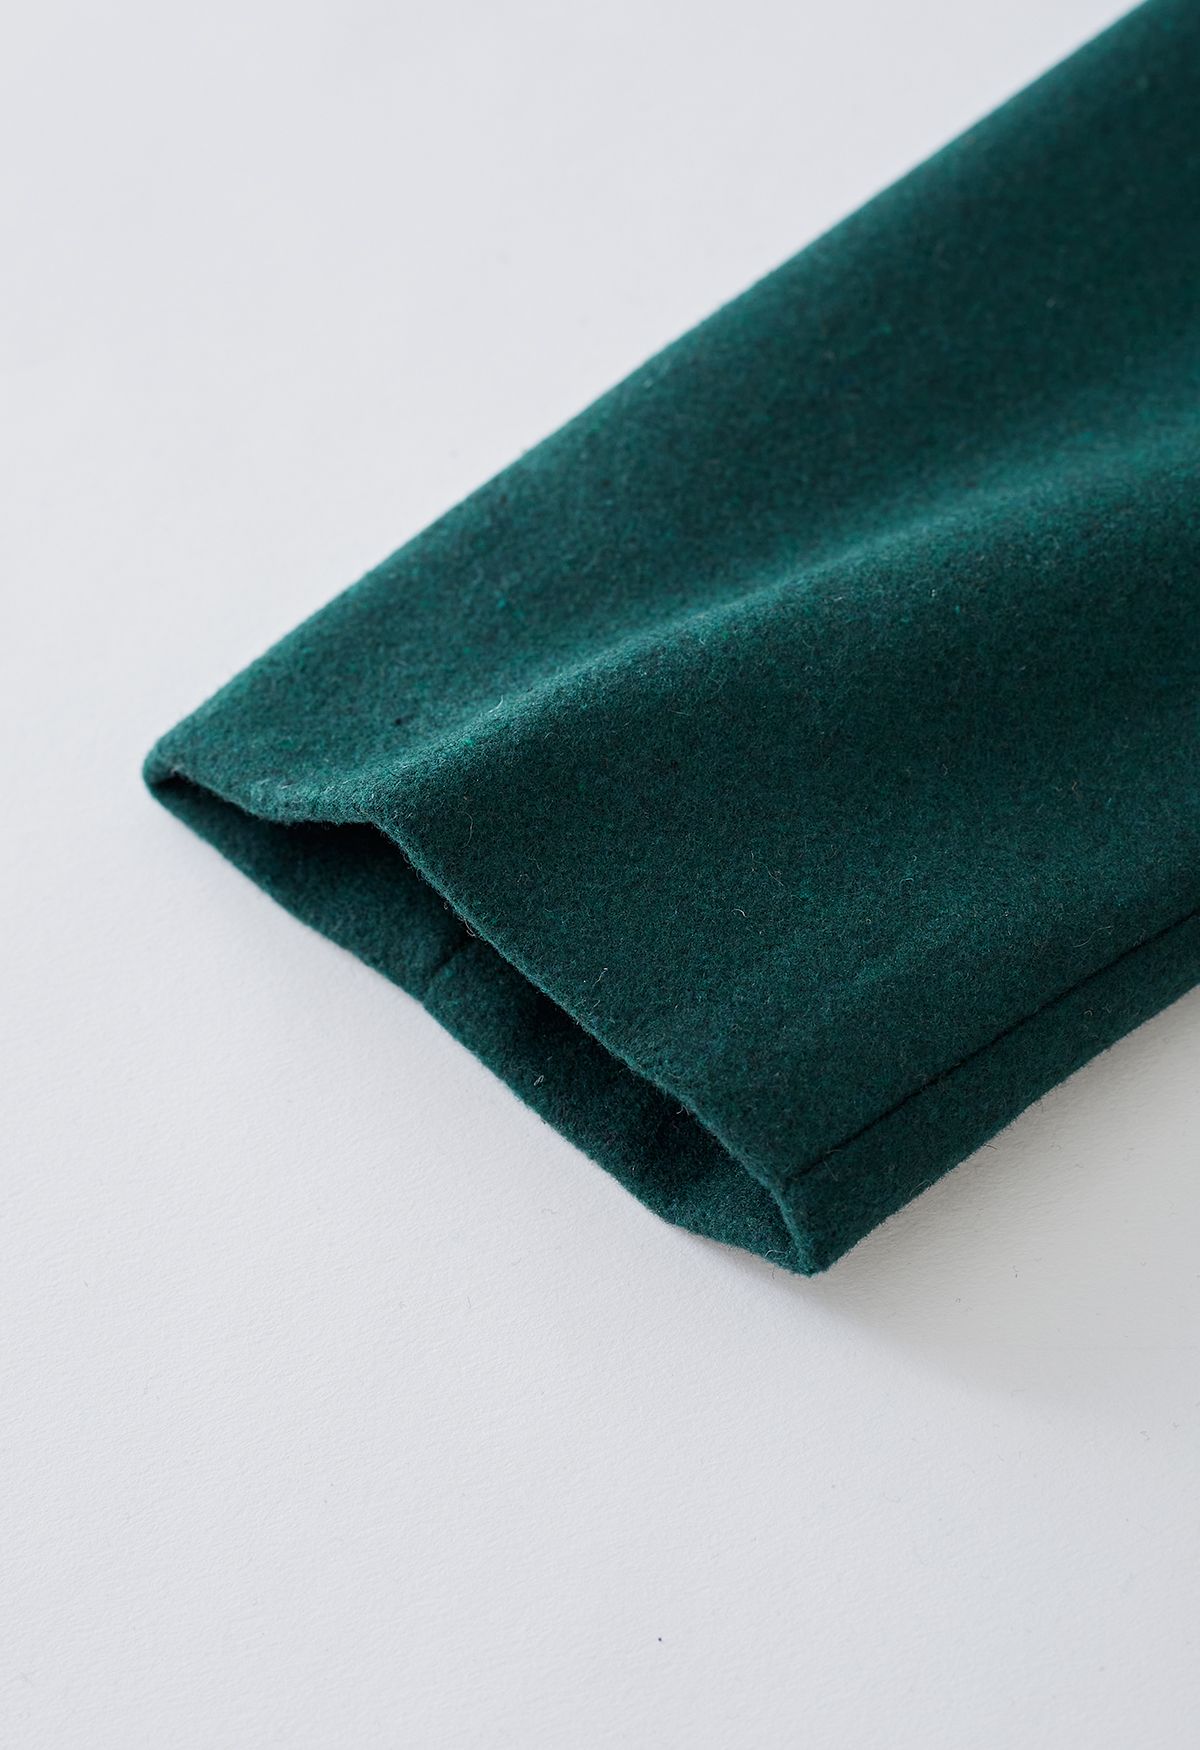 Free Myself Open Front Wool-Blend Coat in Emerald